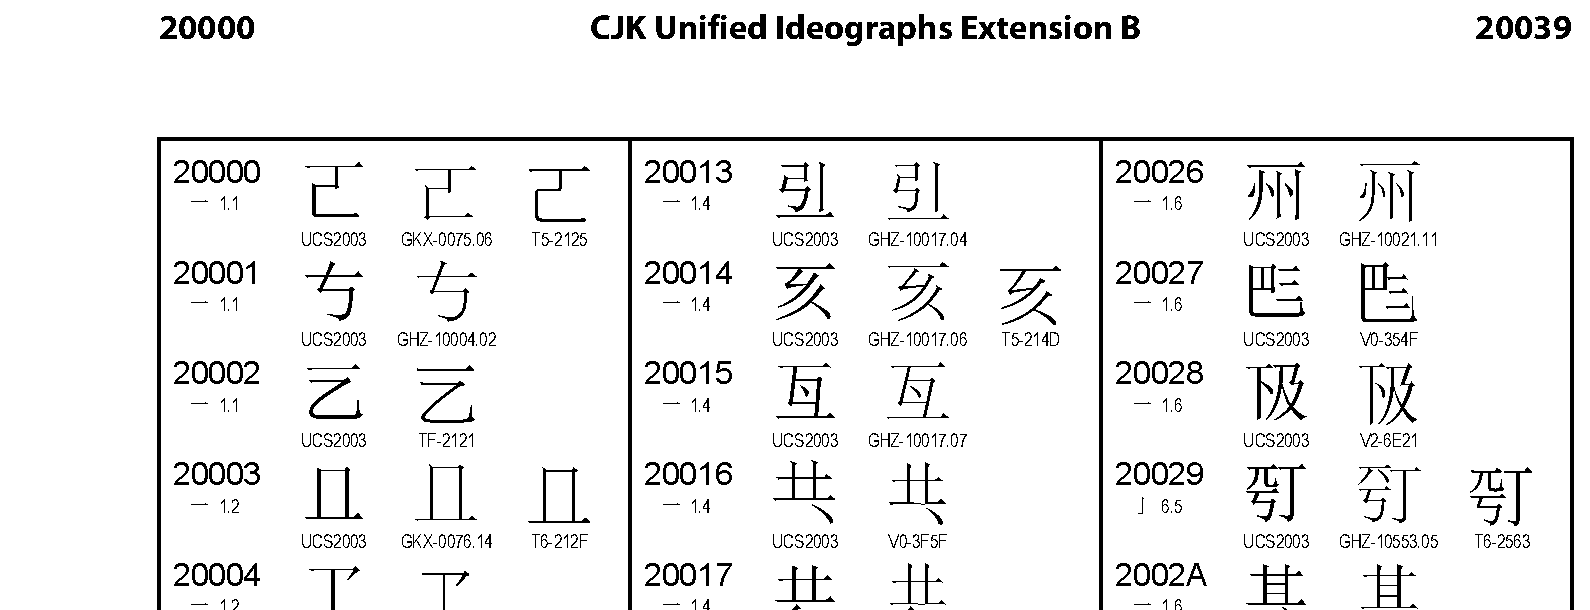 Unicode - CJK Unified Ideographs Extension B